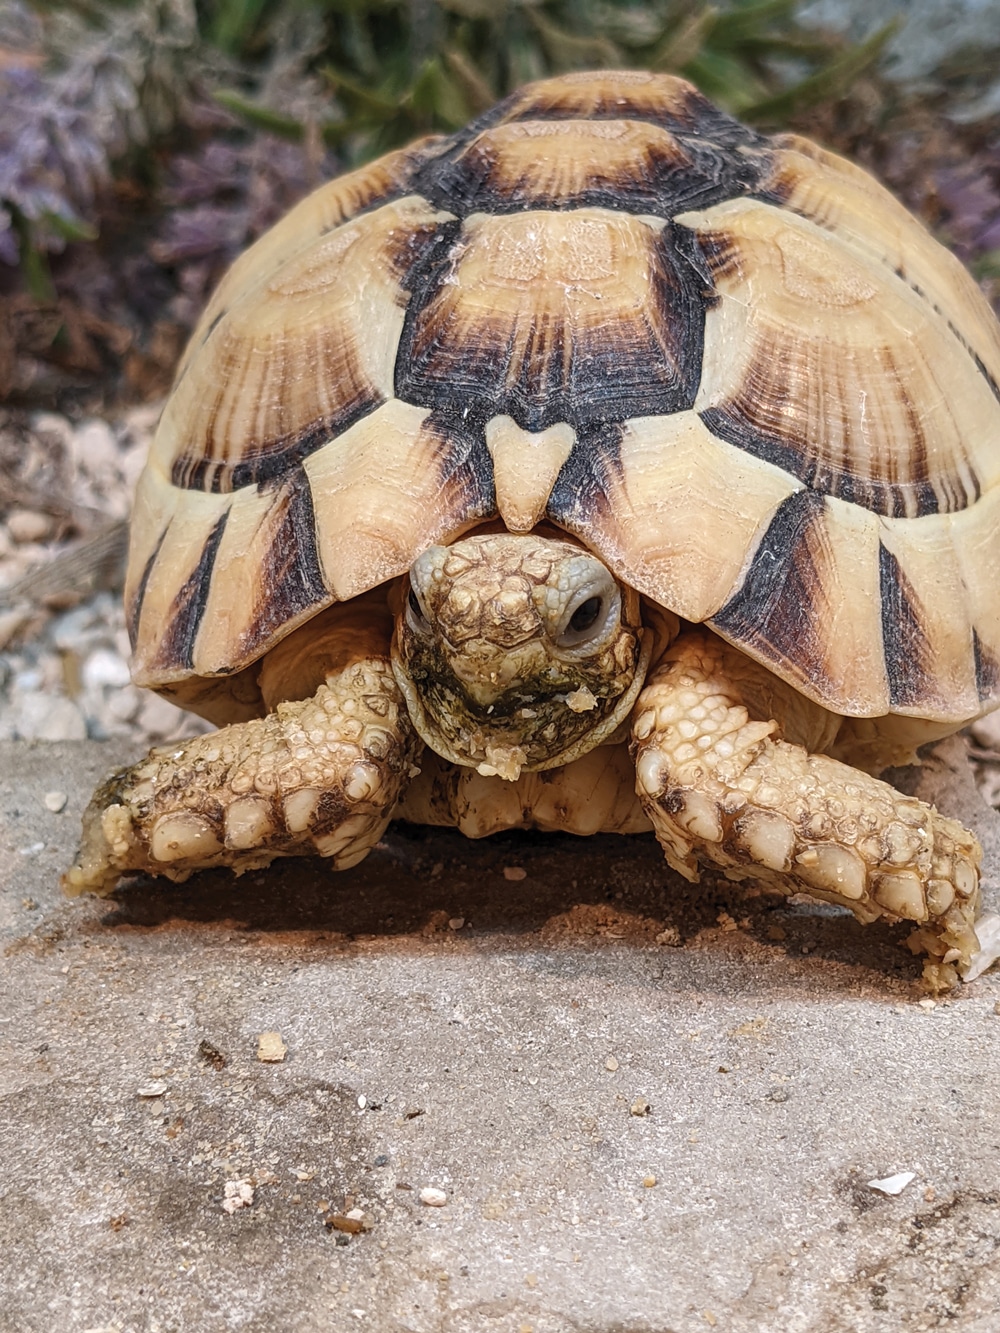 The Egyptian Tortoise, <em>Testudo kleinmanni</em> in Captivity